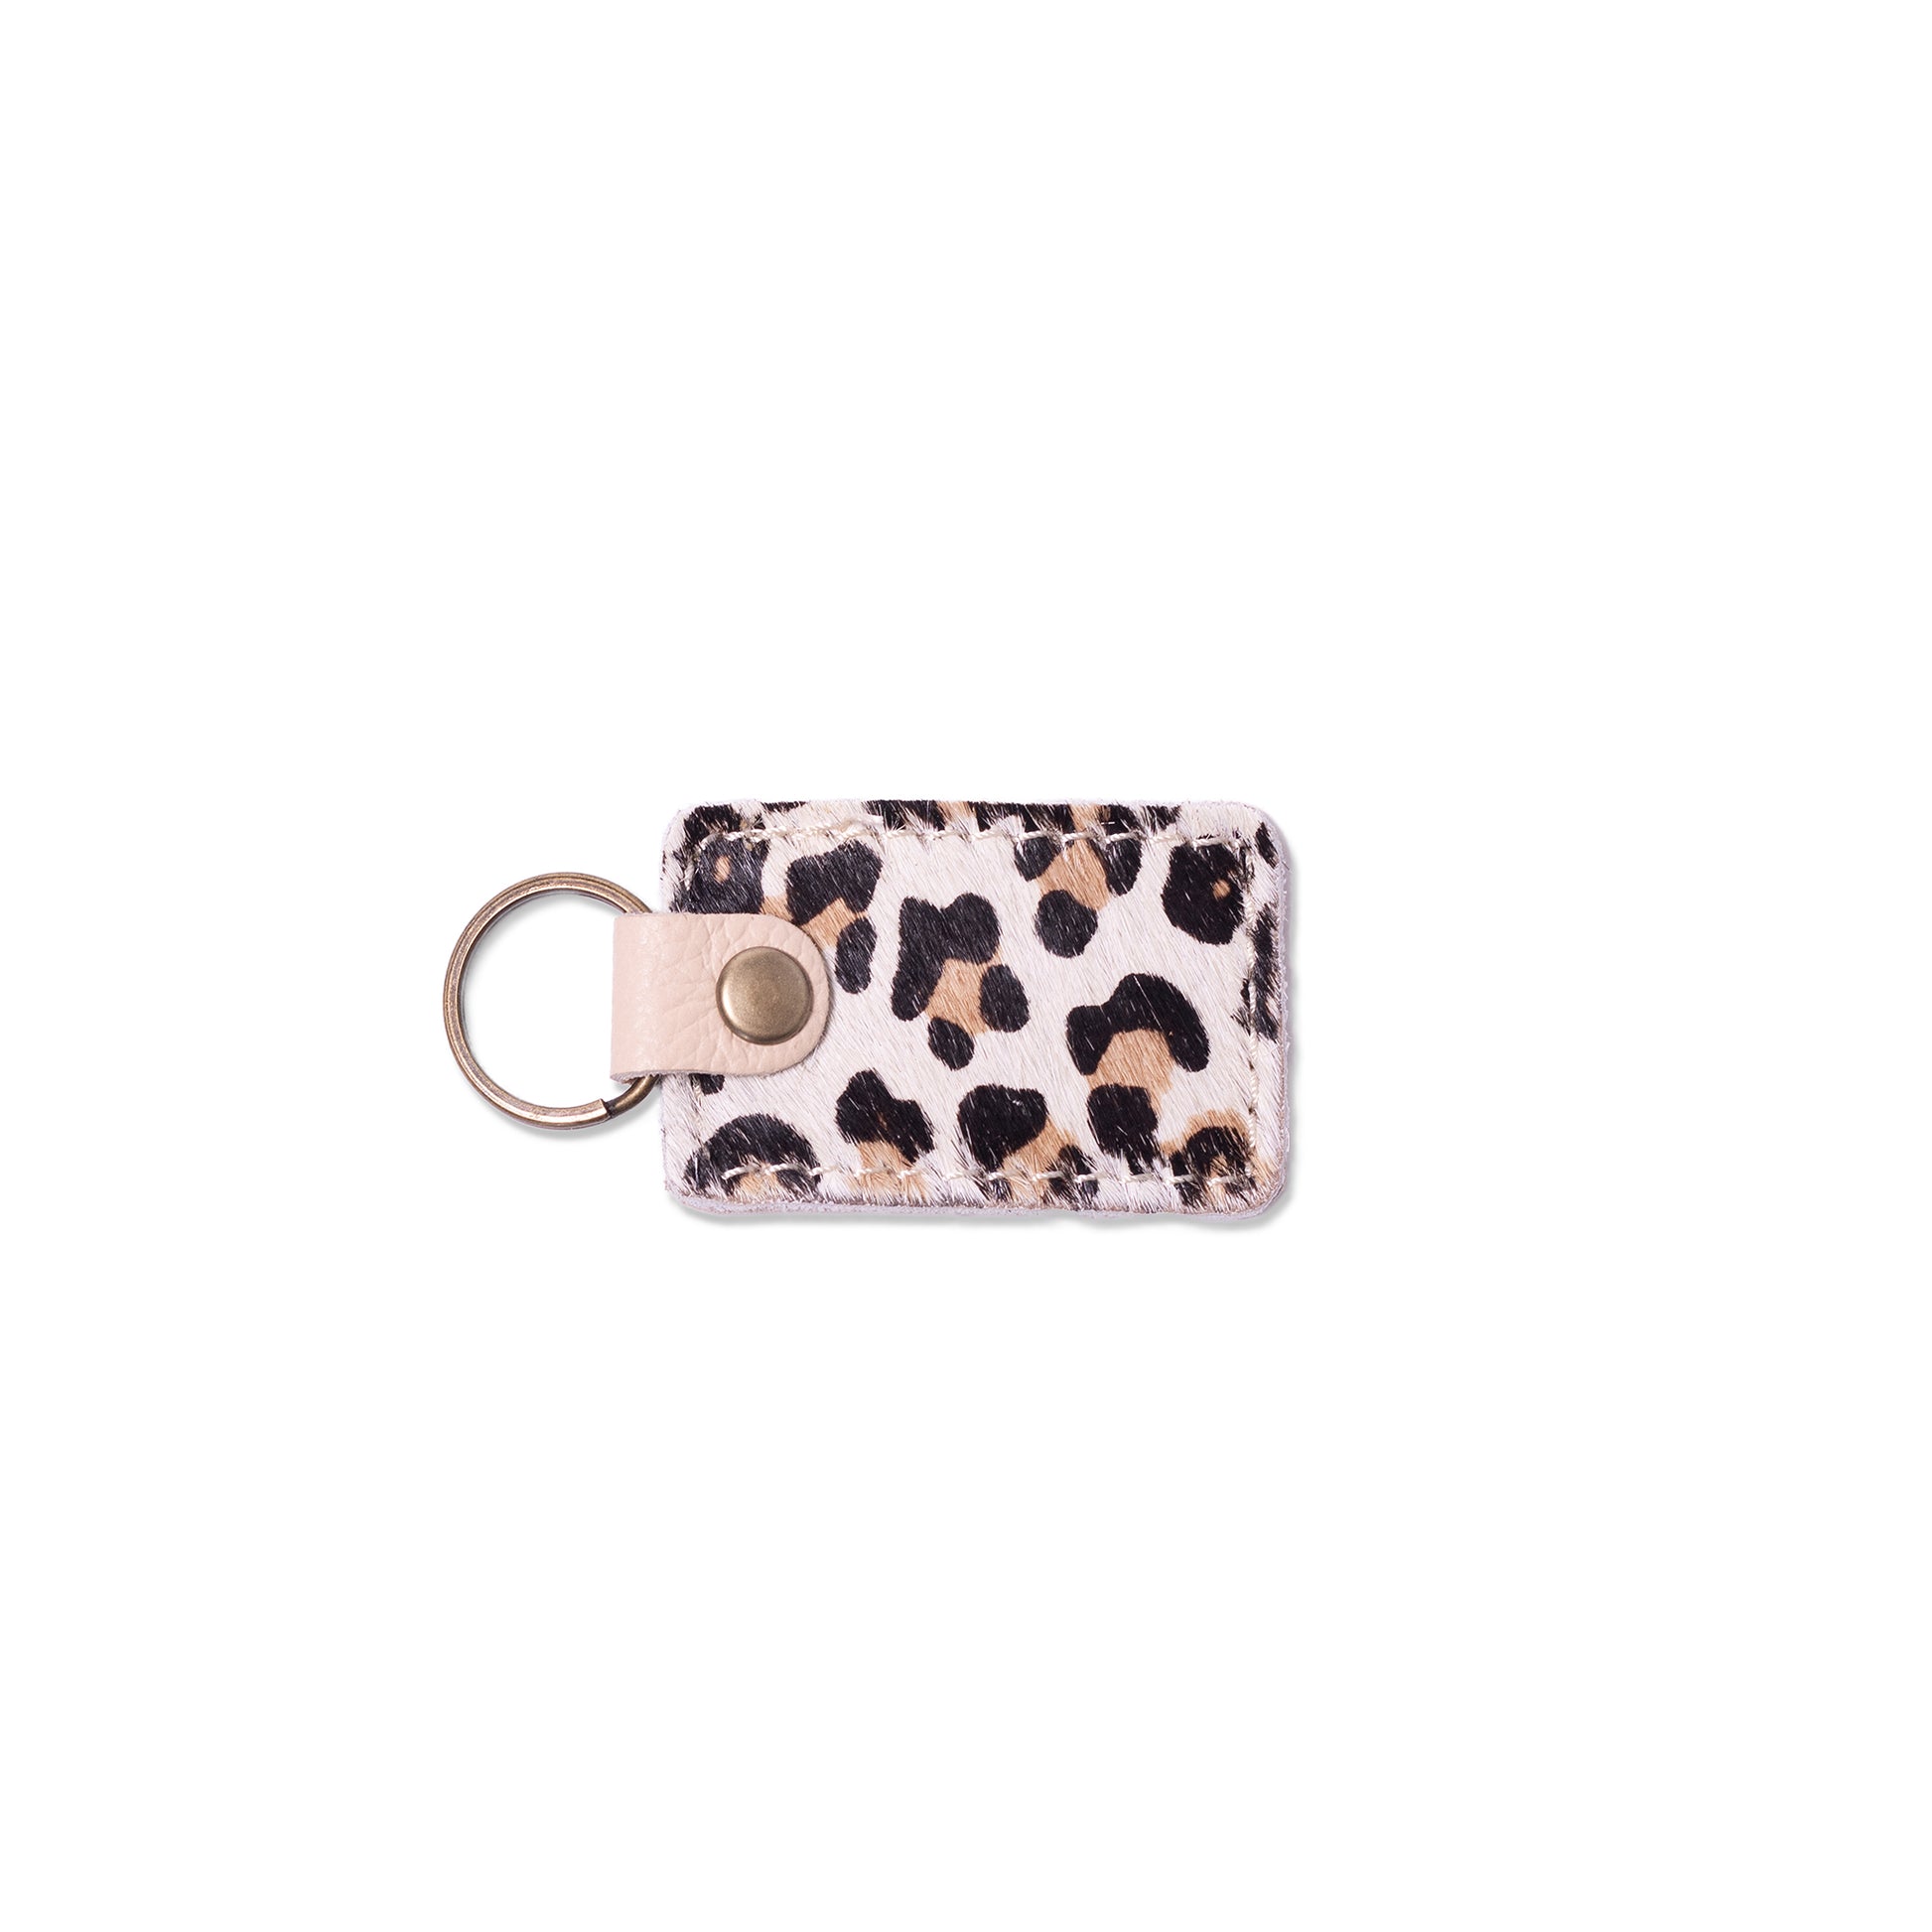 Antelo Key Ring Kenzi Small Leather Keyring - Limited Editions